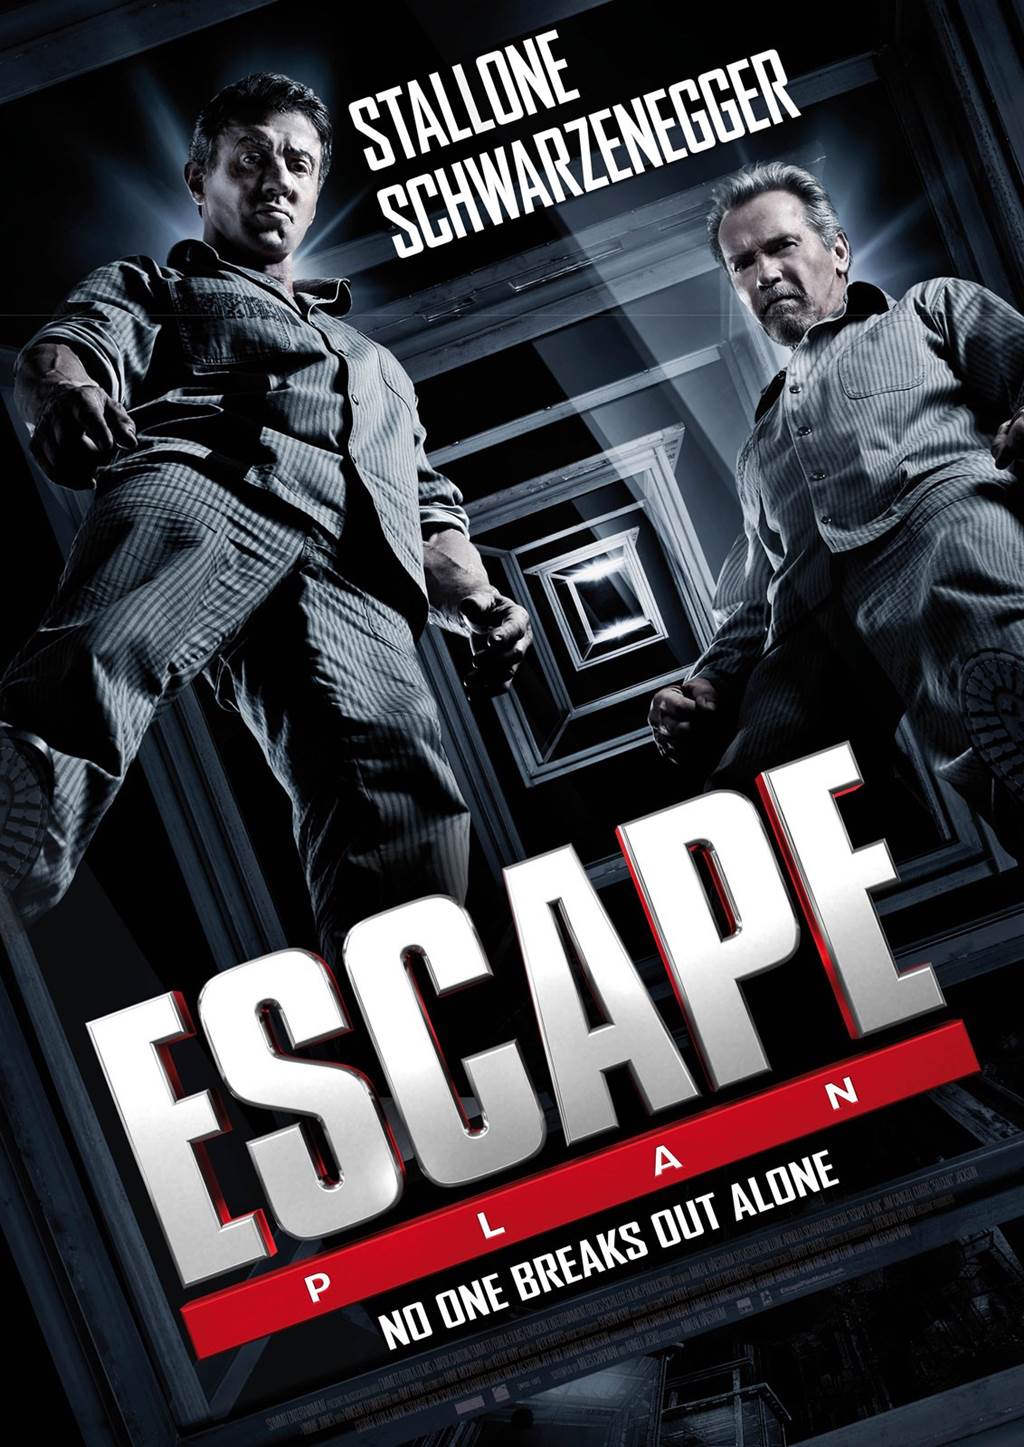 Escape Plan 2013 - Movie Posters - XciteFun.net